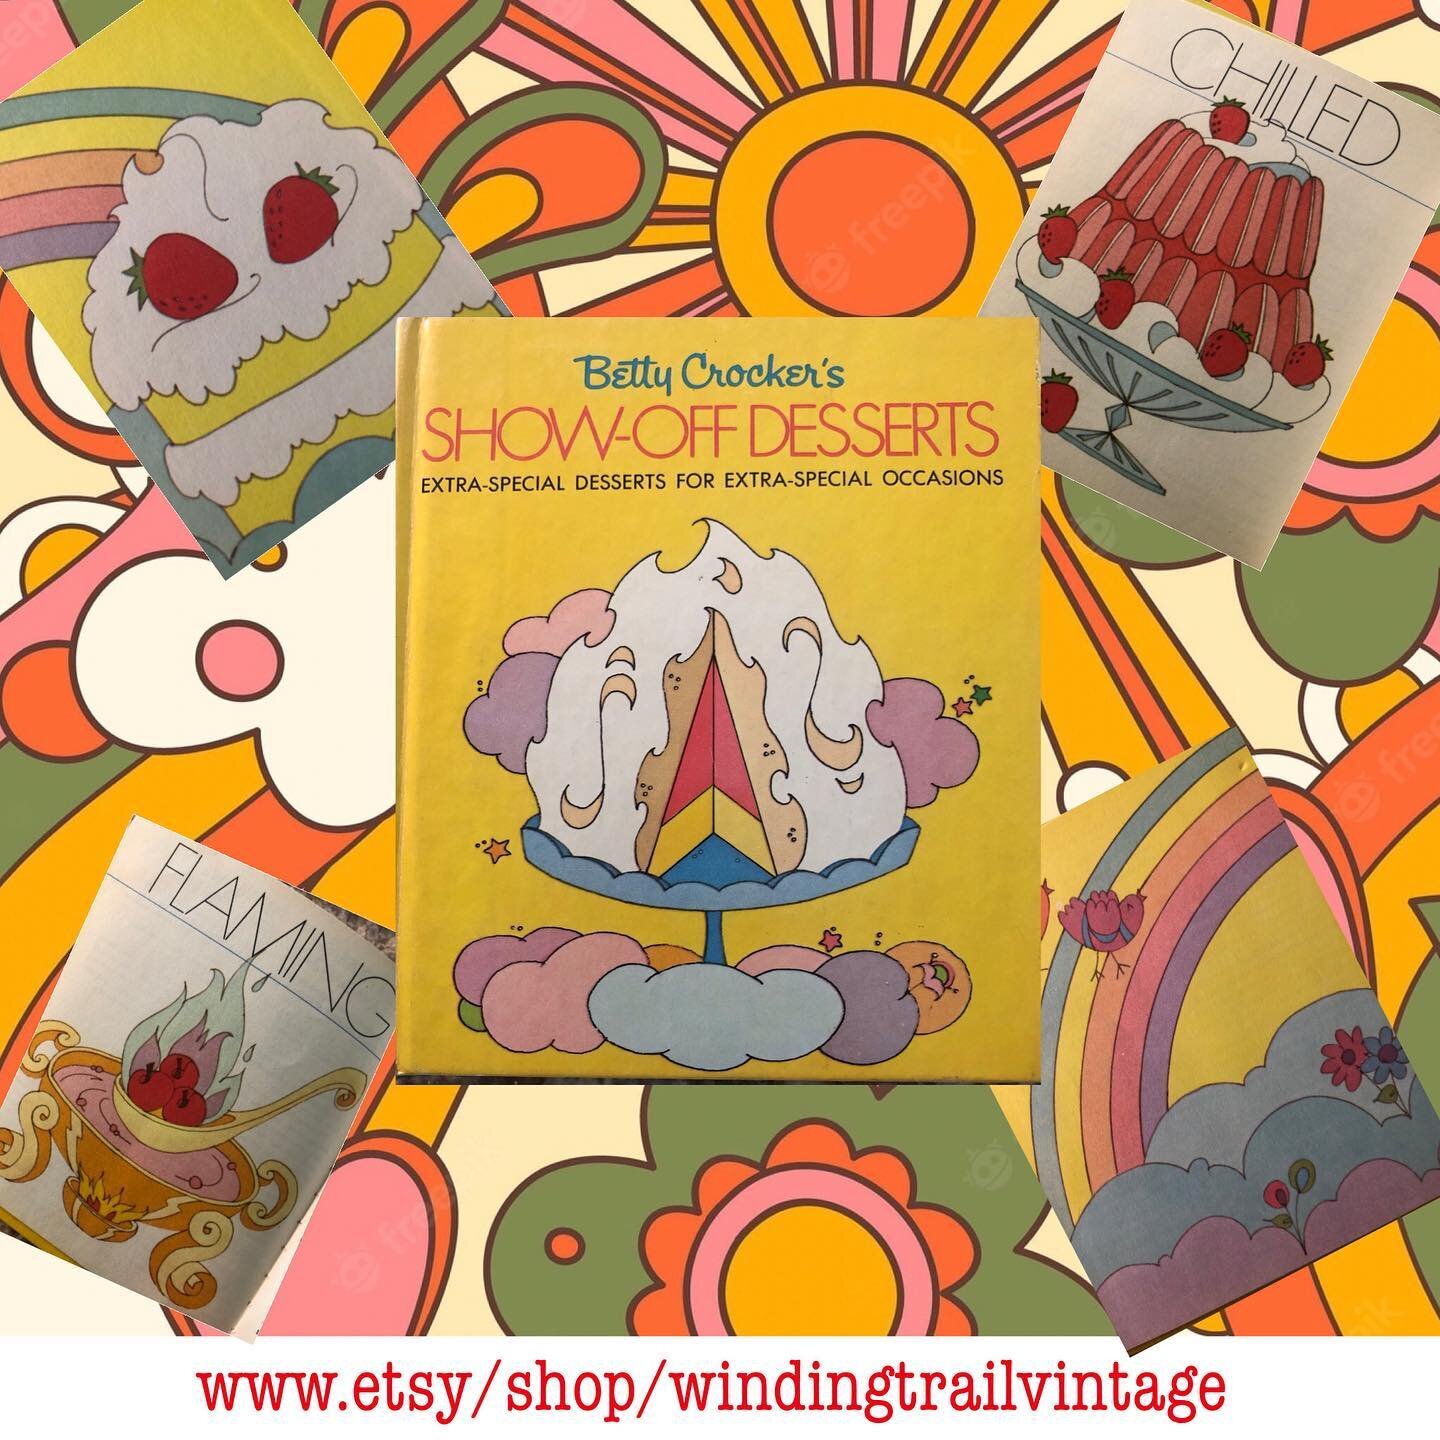 Groovy graphics and tasty treats, this book has it all! 
#1970s, #1970sRecipes, #1970sgroovy #vintagerecipe #VintageRecipes #VintageRecipeBooks #RetroRecipes #FoodPorn #BettyCrocker #BettyCrockerRecipeBook #Cooking#BakedAlaska#Desserts #DessertsOfIns